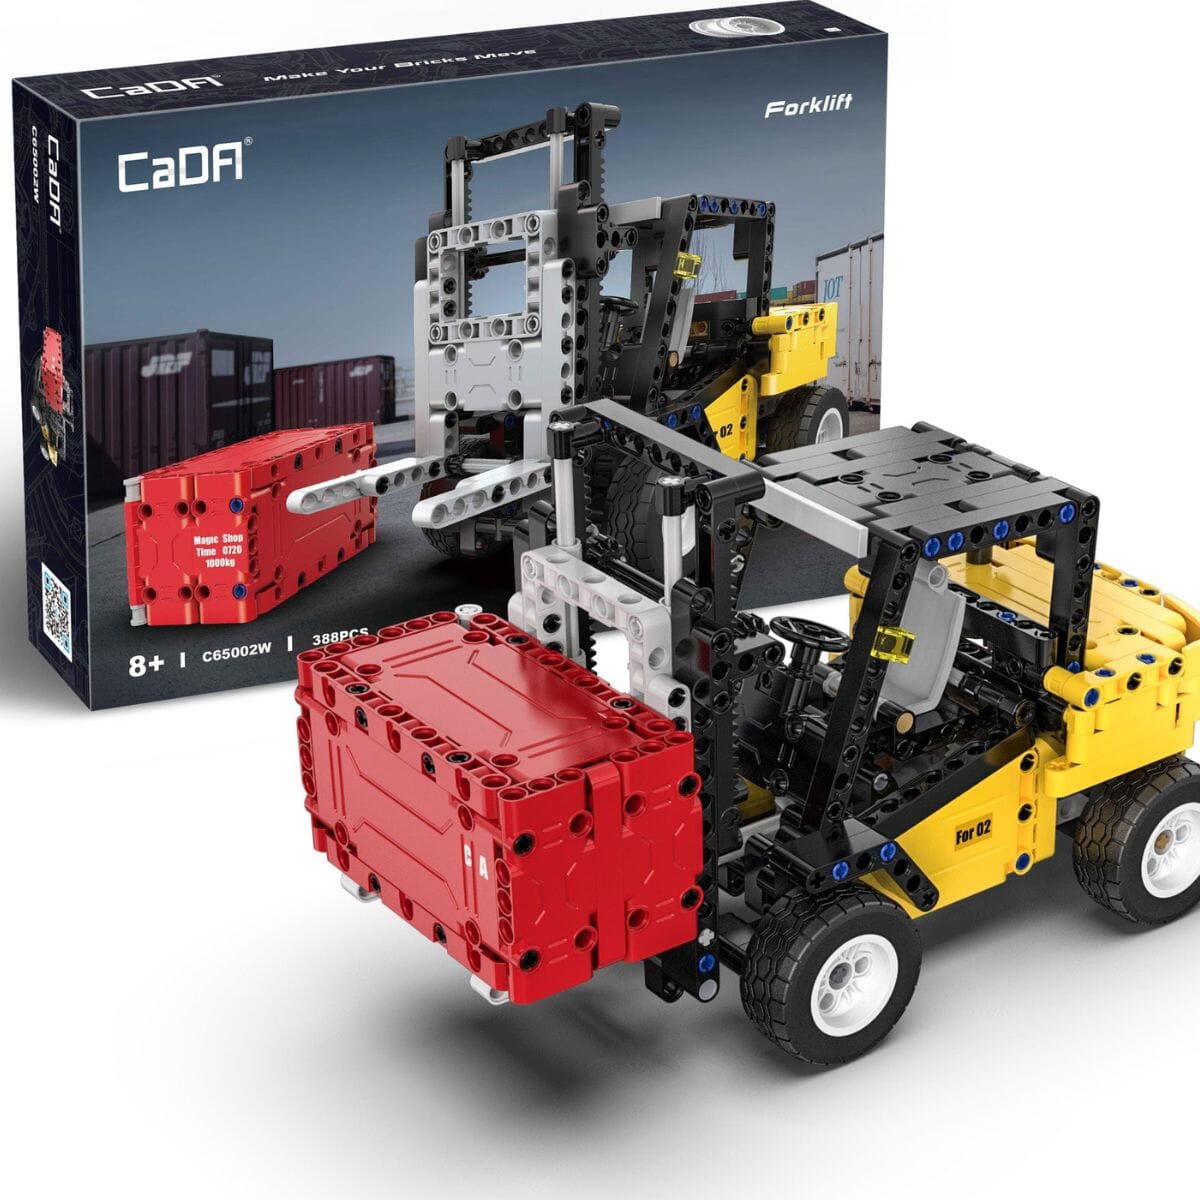 Forklift brick model kit - CaDA C65002W - 388 bricks